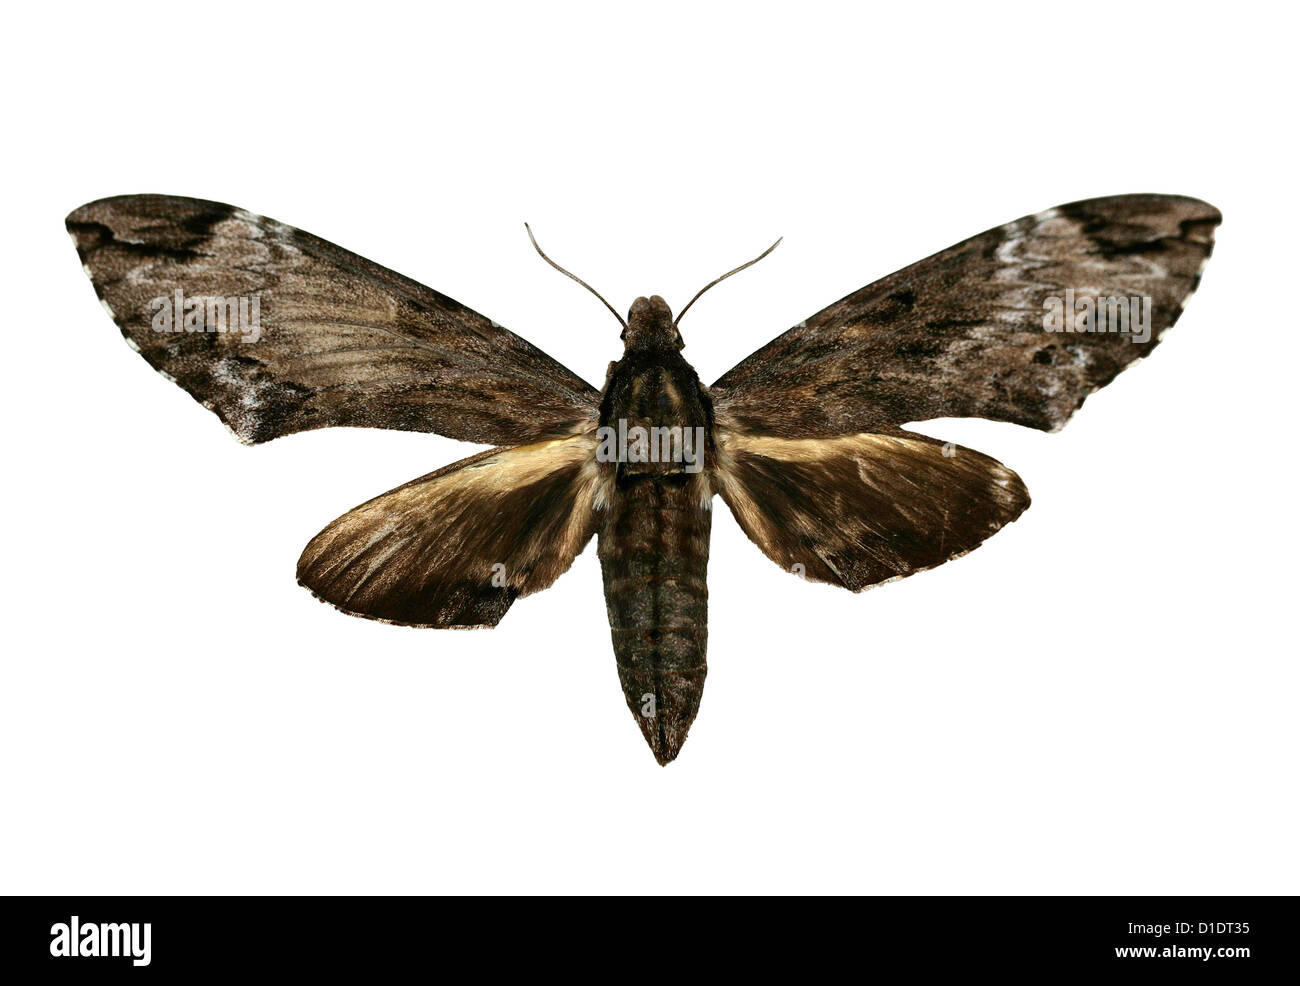 Australian Privet Hawk Moth, Psilogramma menephron, Sphingidae Stock Photo  - Alamy